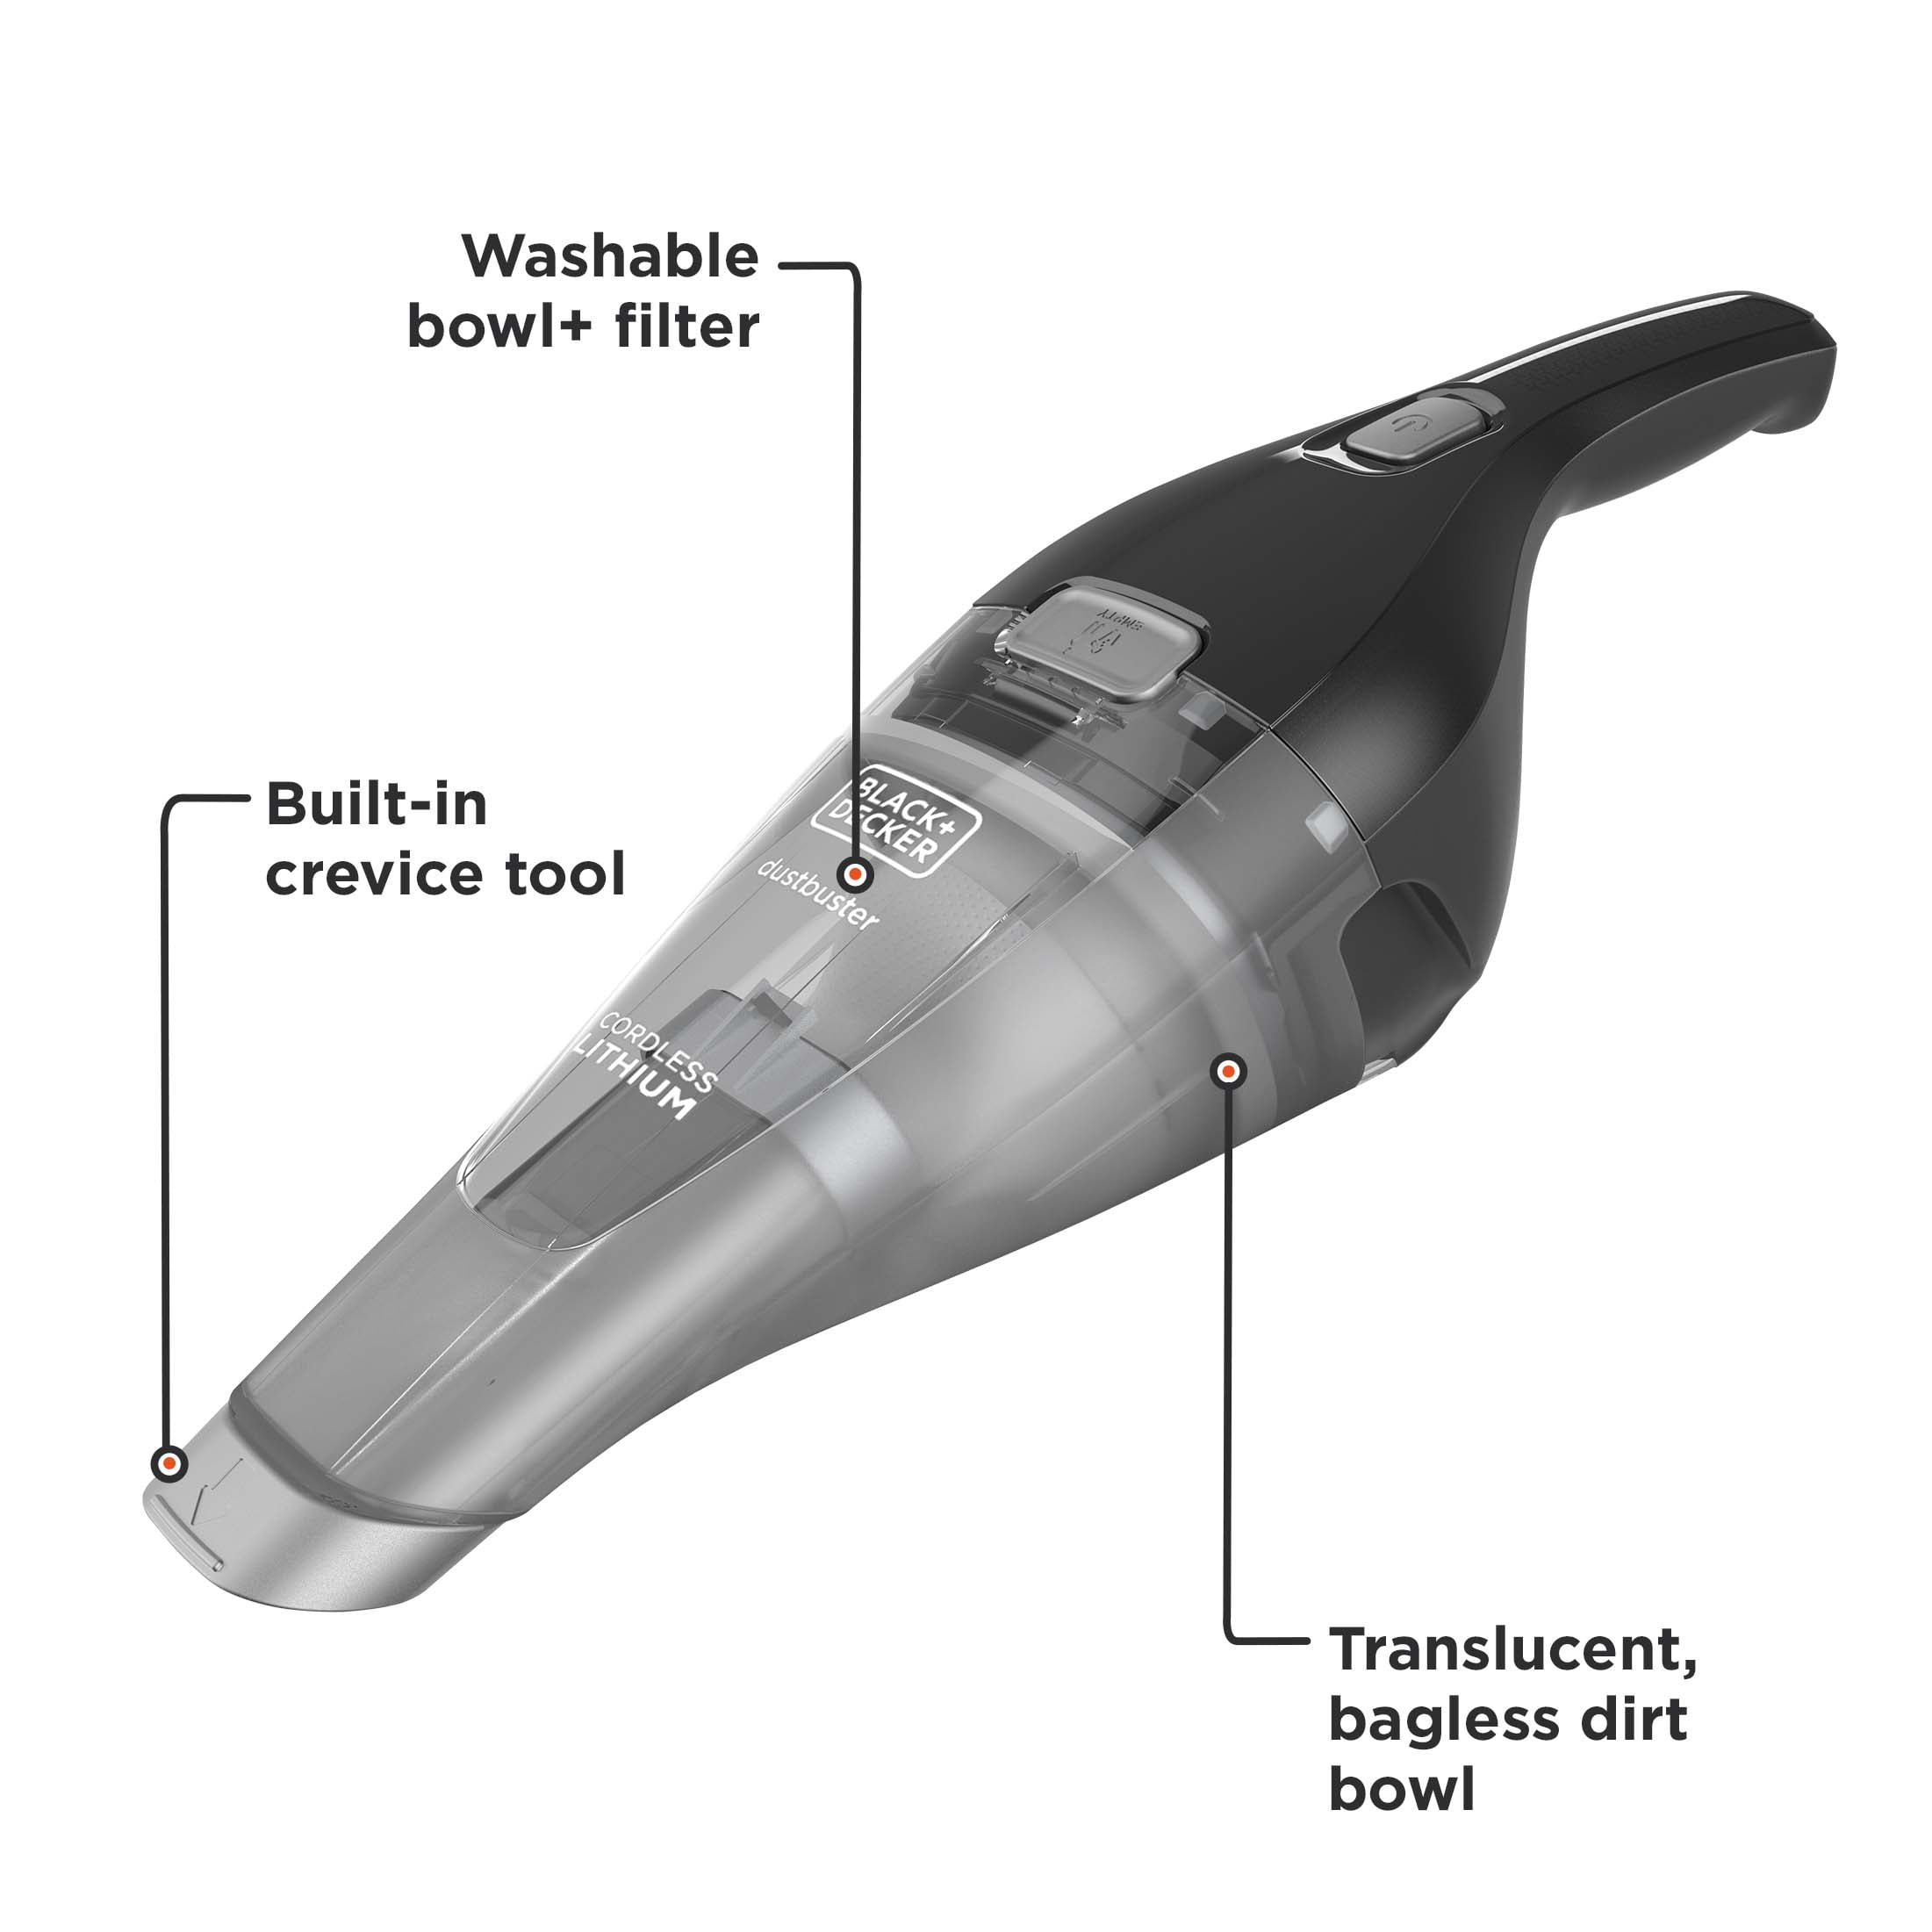 BLACK+DECKER DUSTBUSTER Lithium FLEX Hand Vacuum, for Sale in Lodi